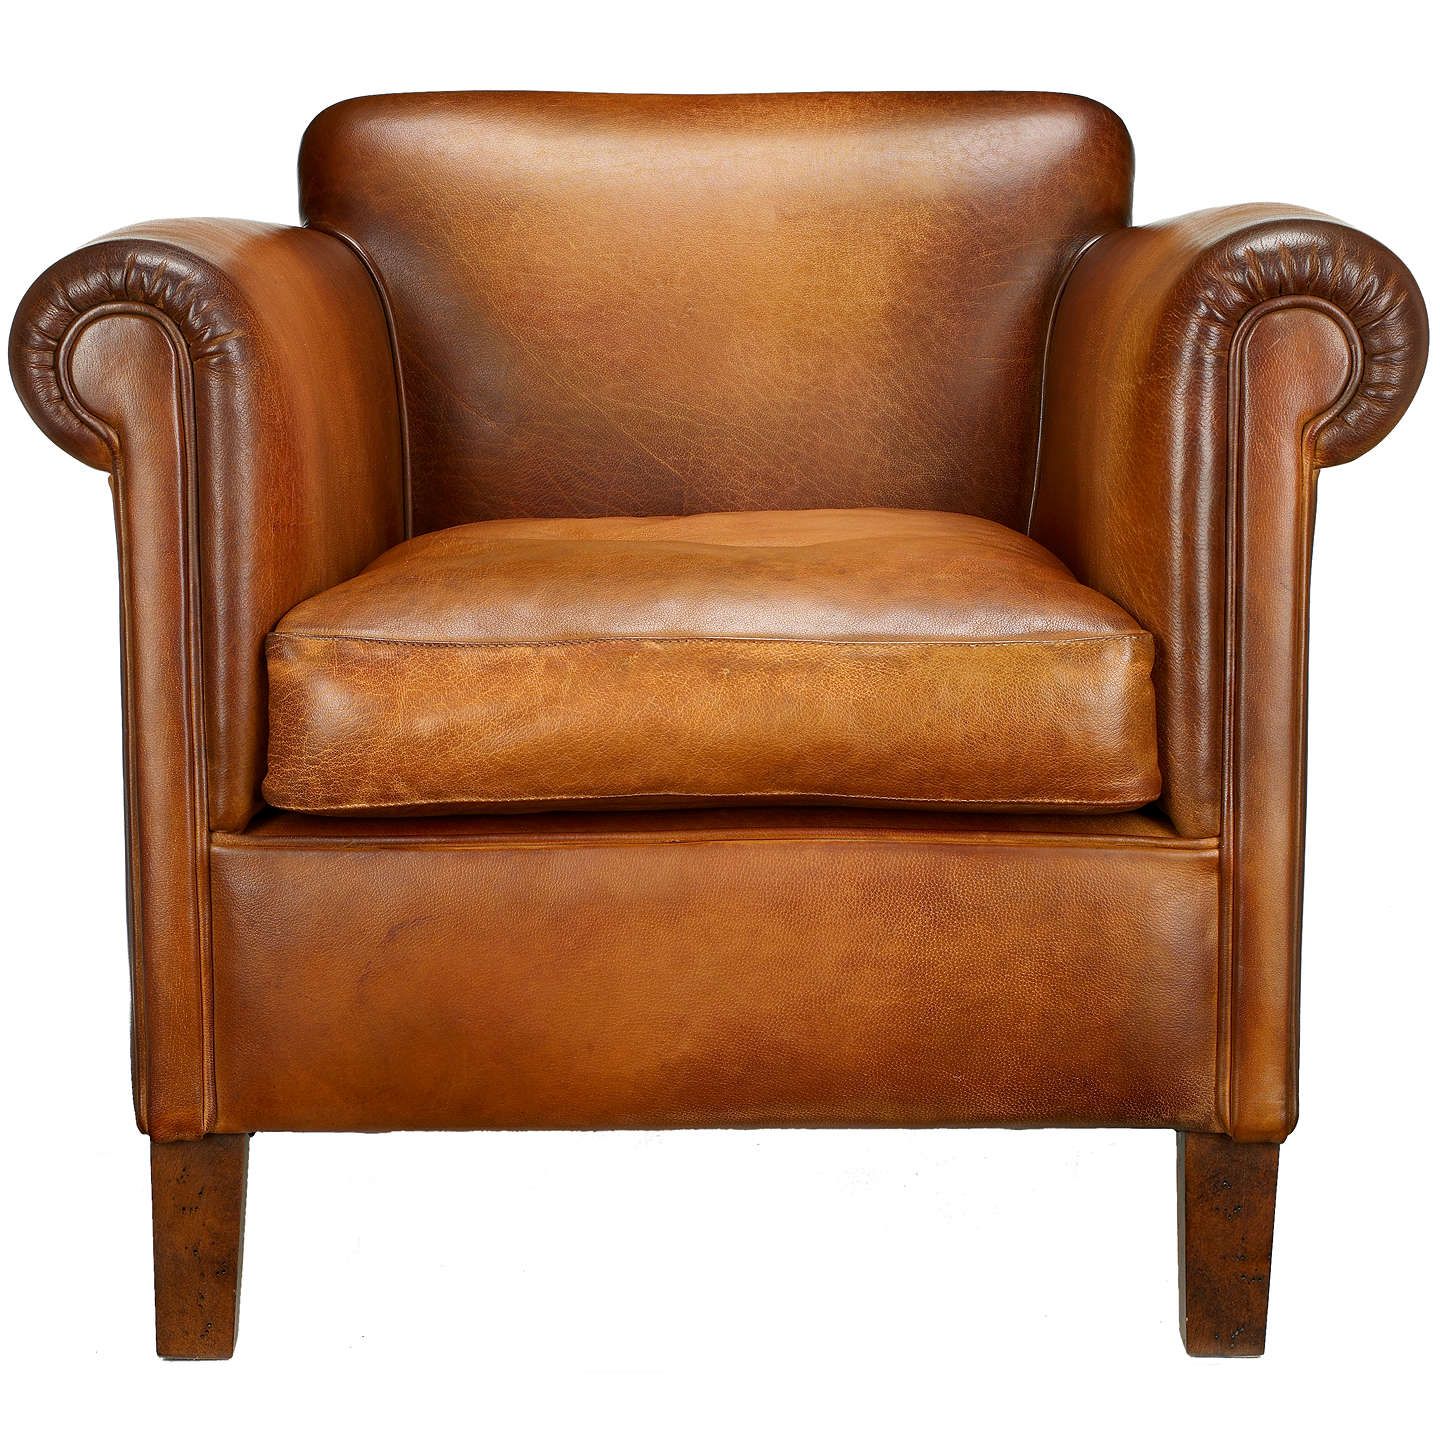 John Lewis Camford Leather Armchair, Buffalo Antique | Armchairs ...